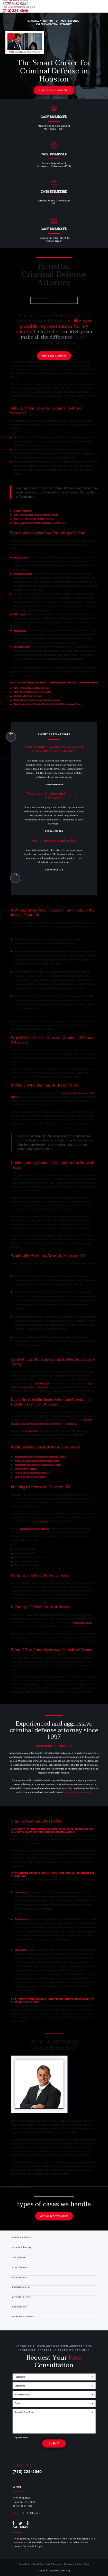 The David A. Breston Law Office - Houston TX Lawyers